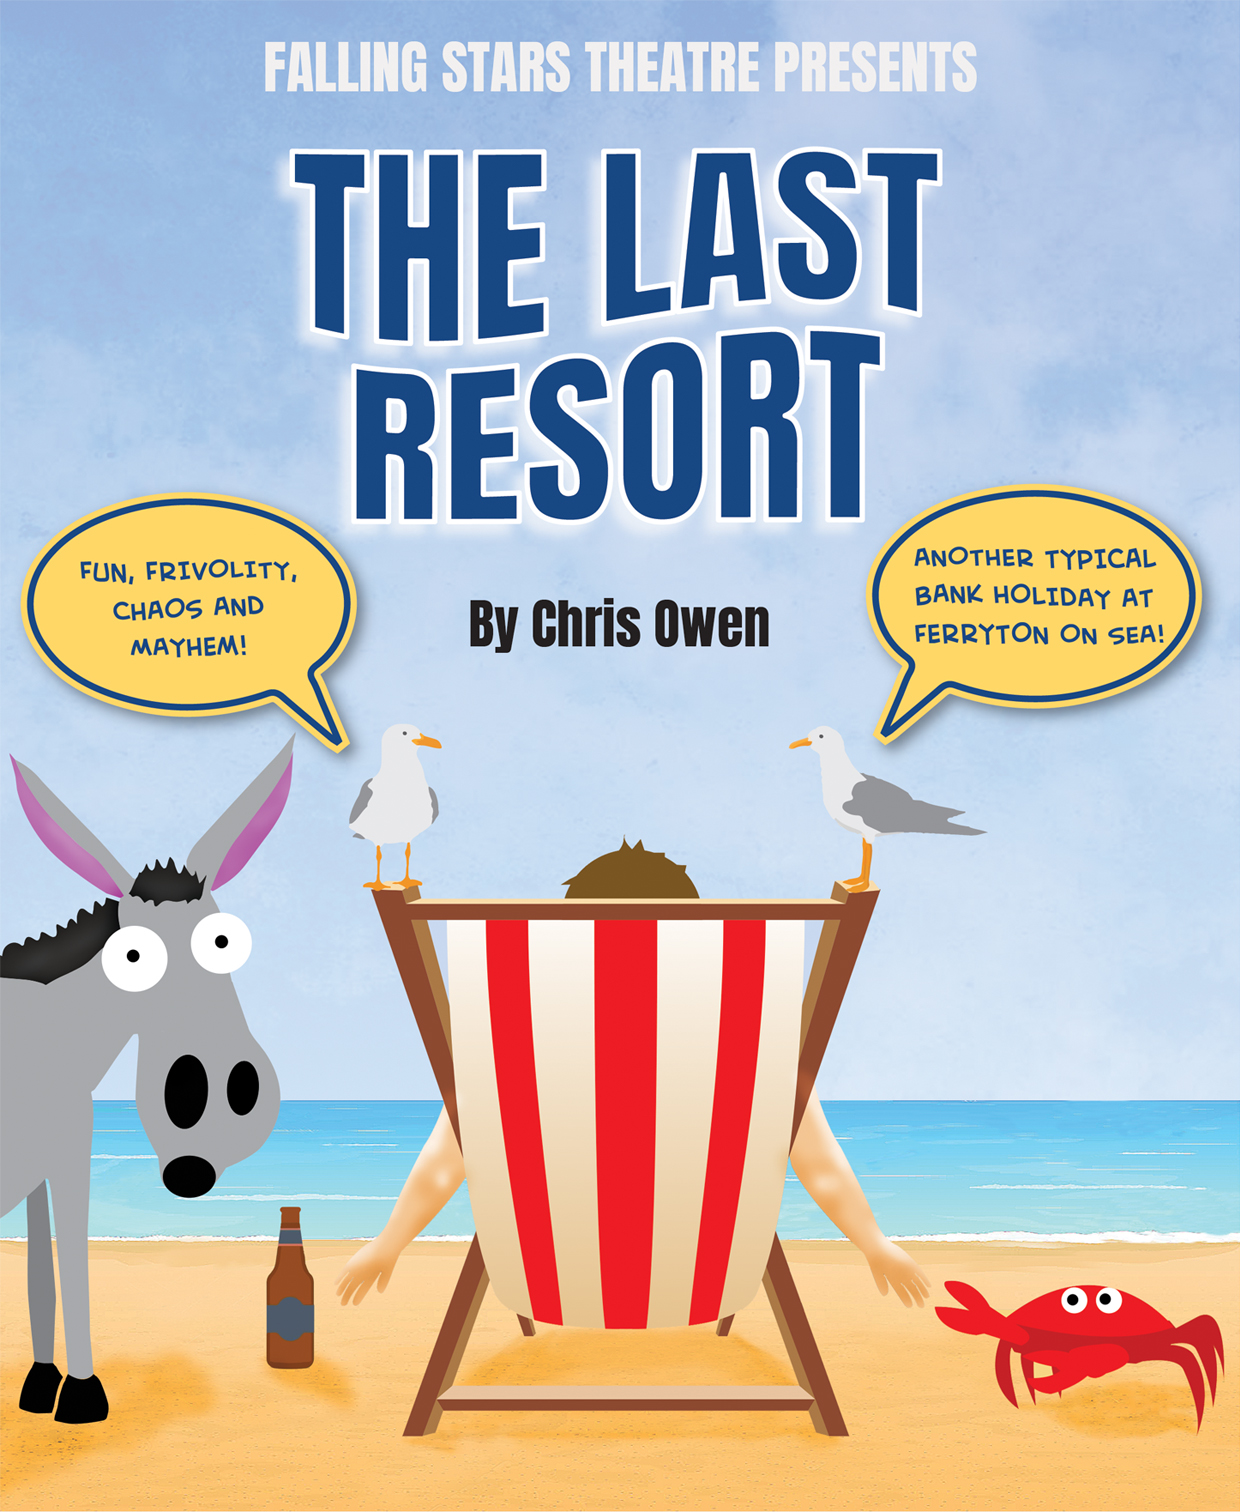 The Last Resort by Falling Stars Theatre